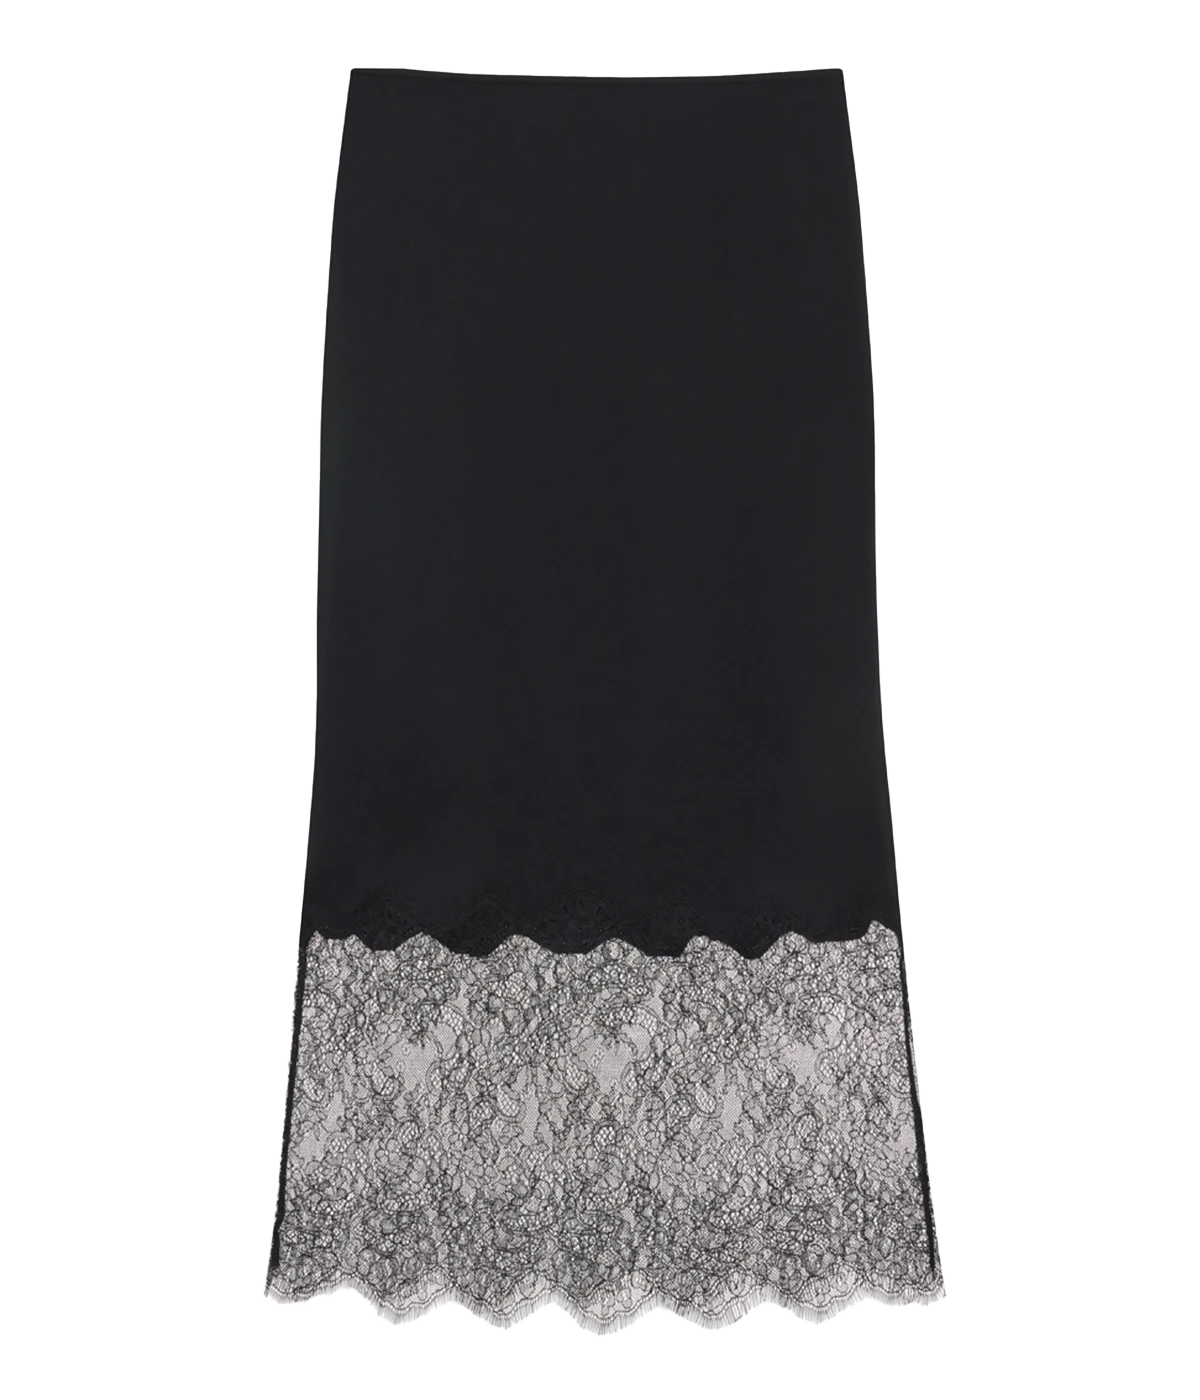 Amelie Skirt in Black